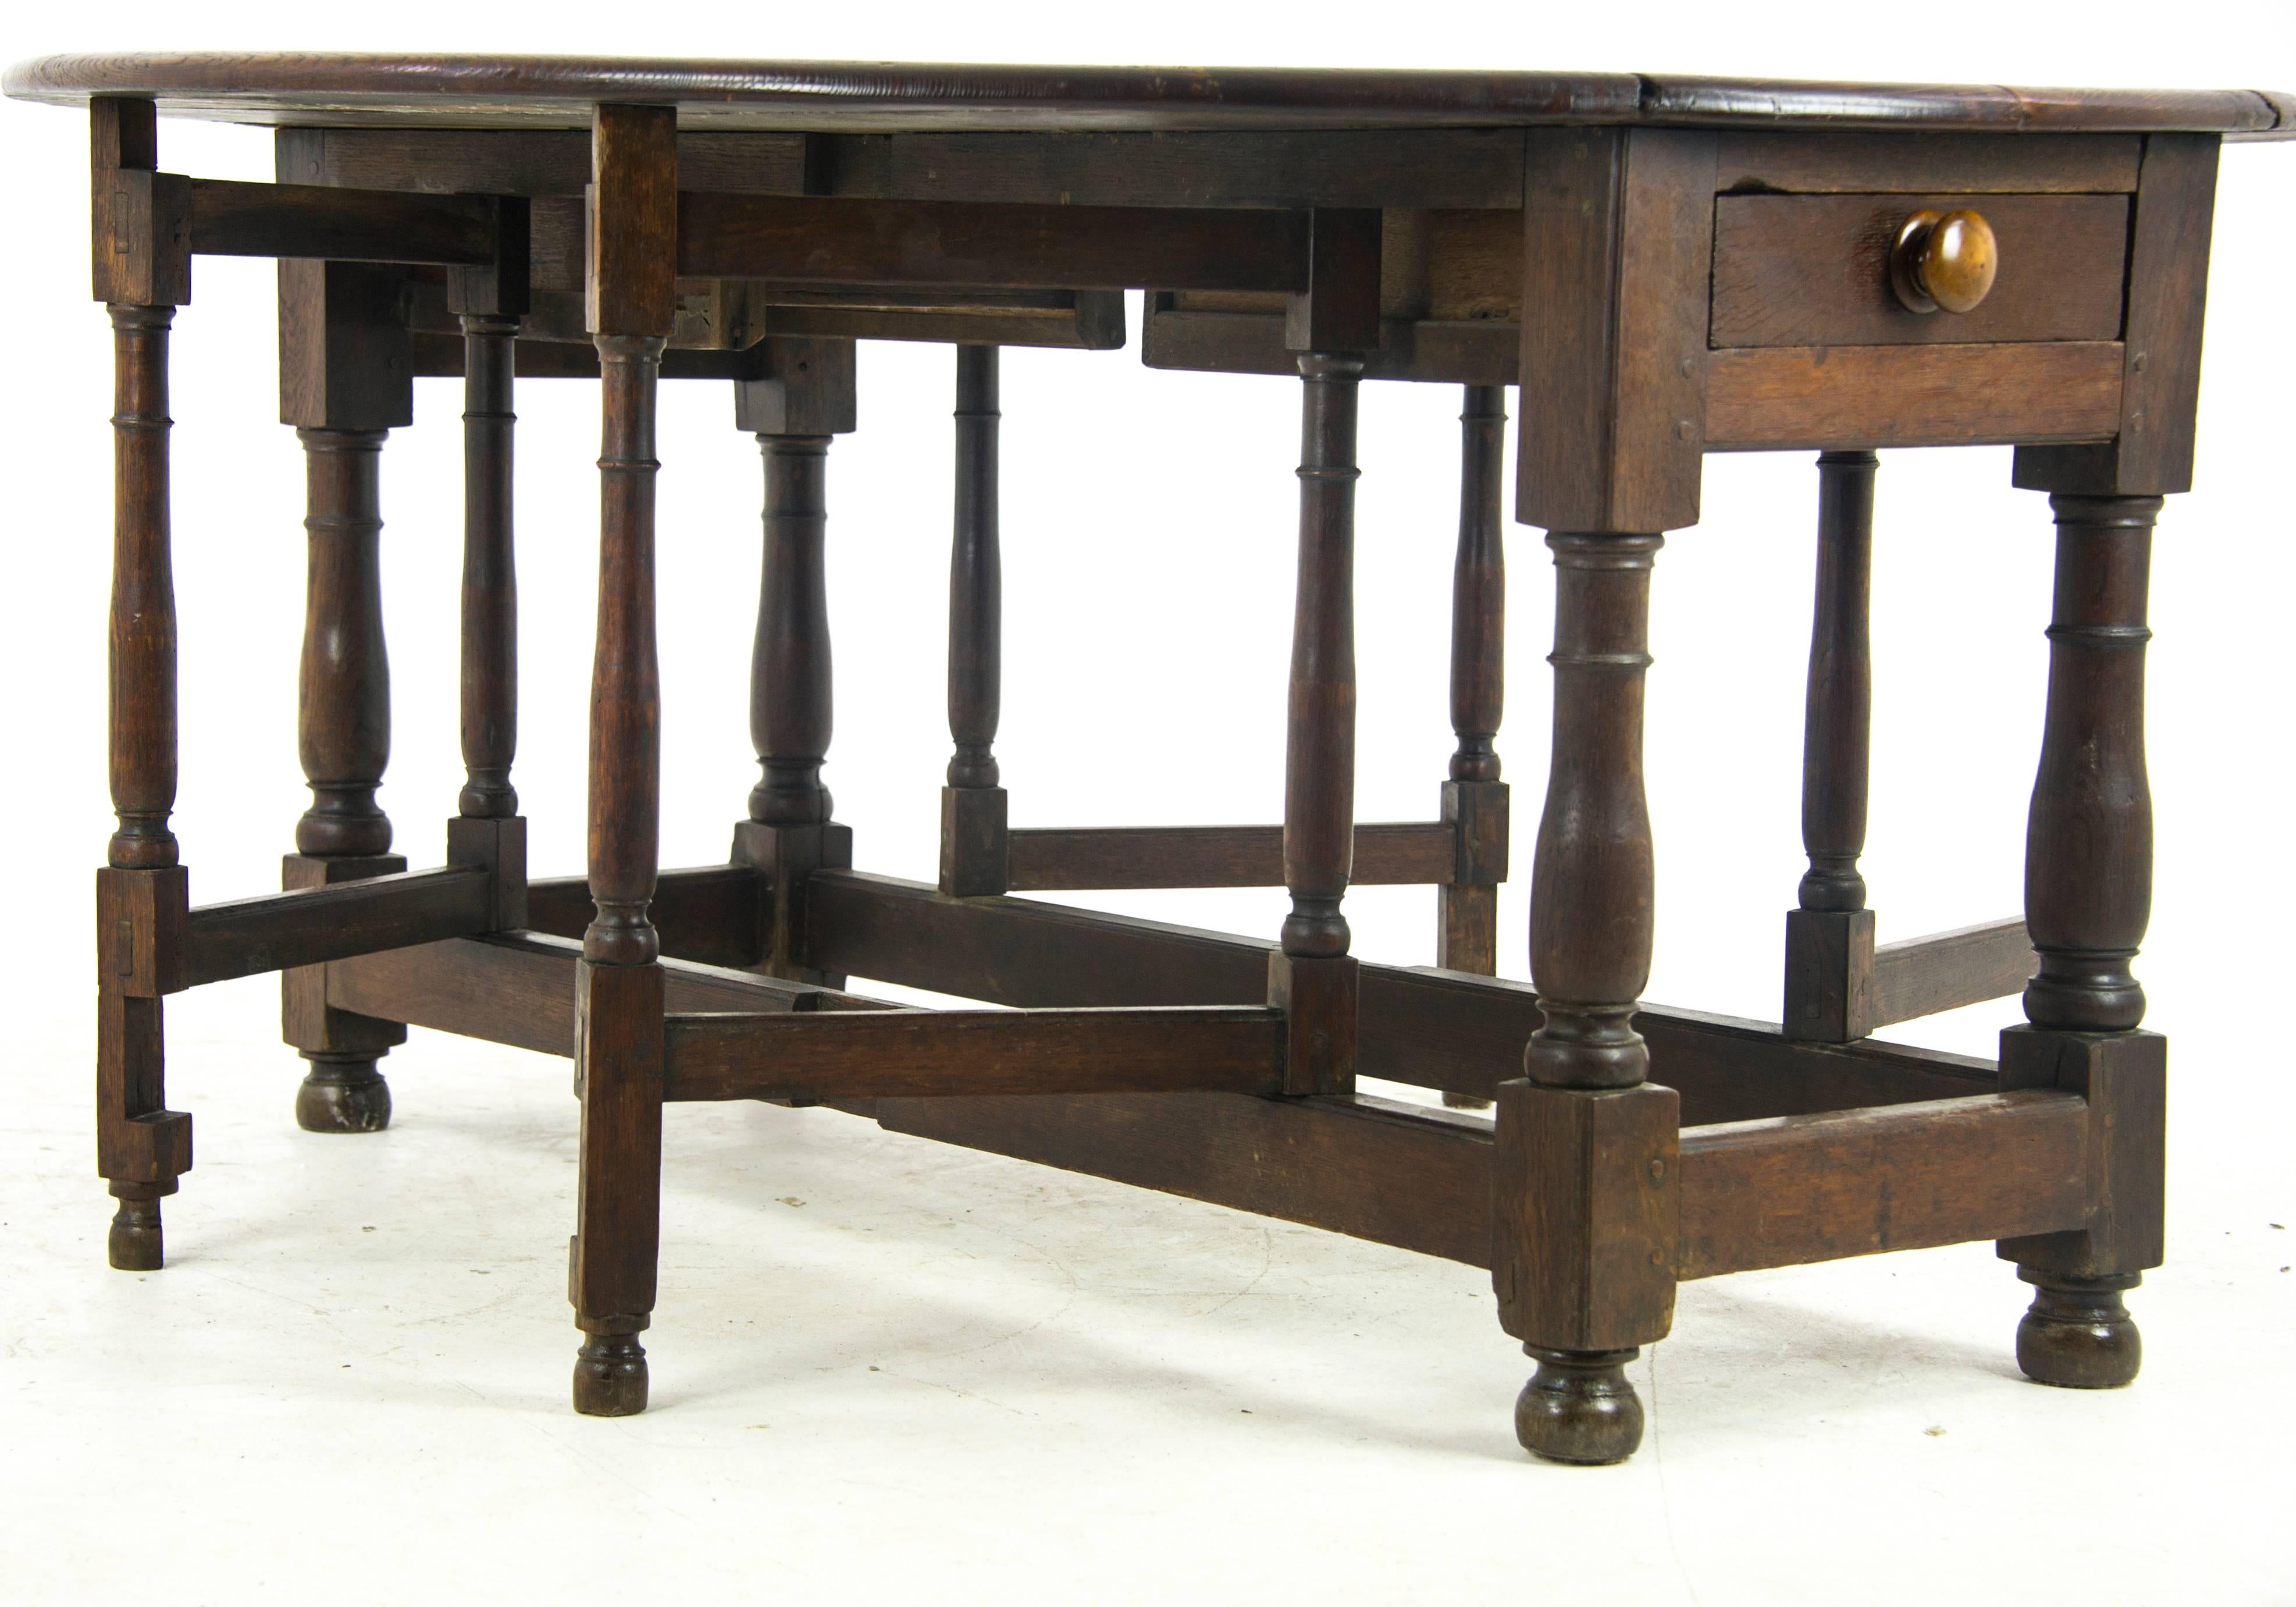 Hand-Crafted Antique Gateleg Table, Drop-Leaf Table, Oak, Scotland 1800, B1031